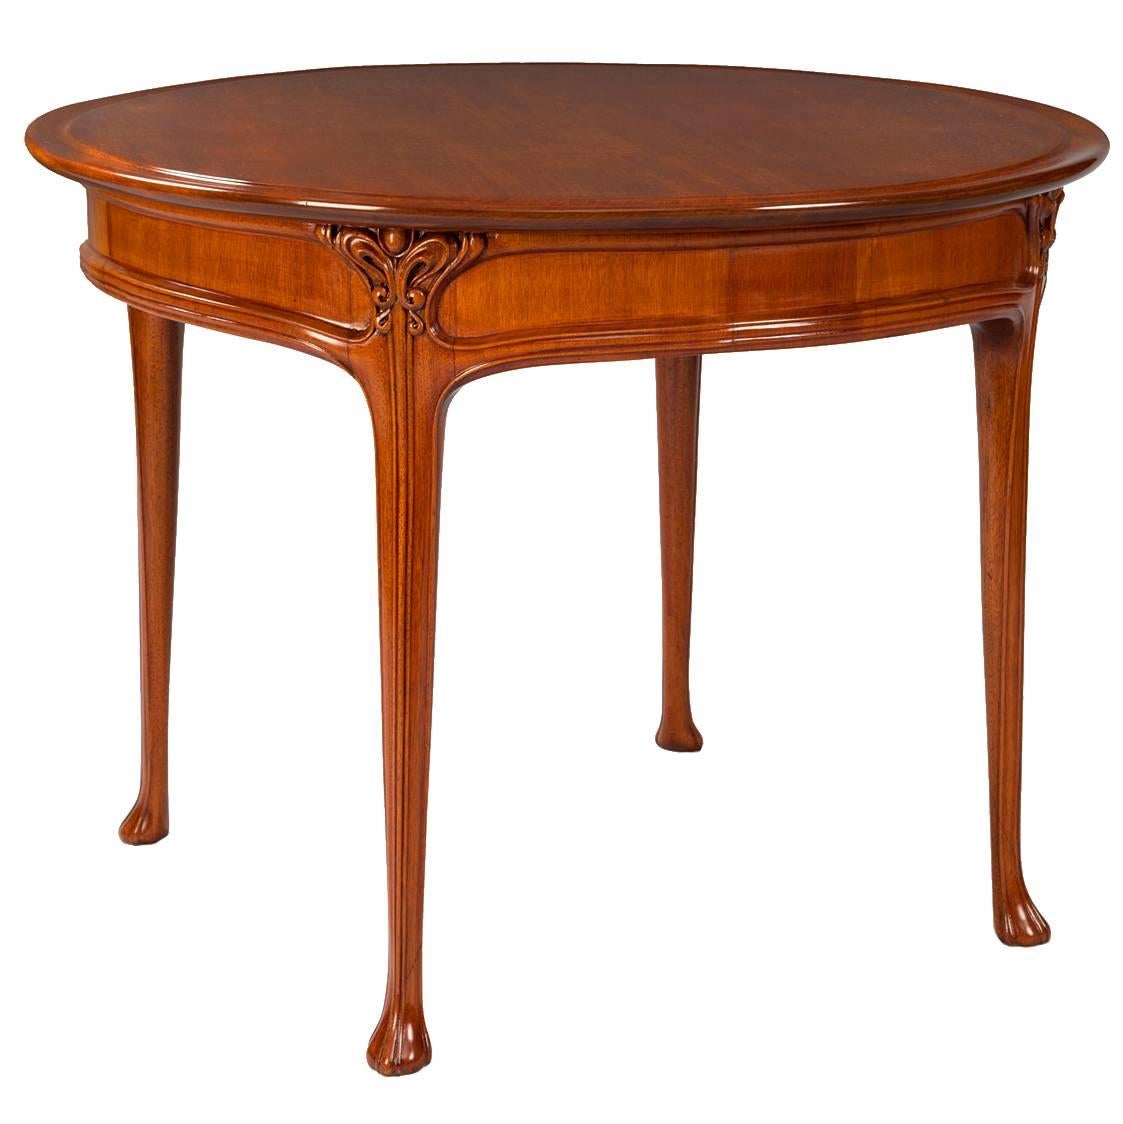 Edouard Colonna French Art Nouveau Side Table For Sale